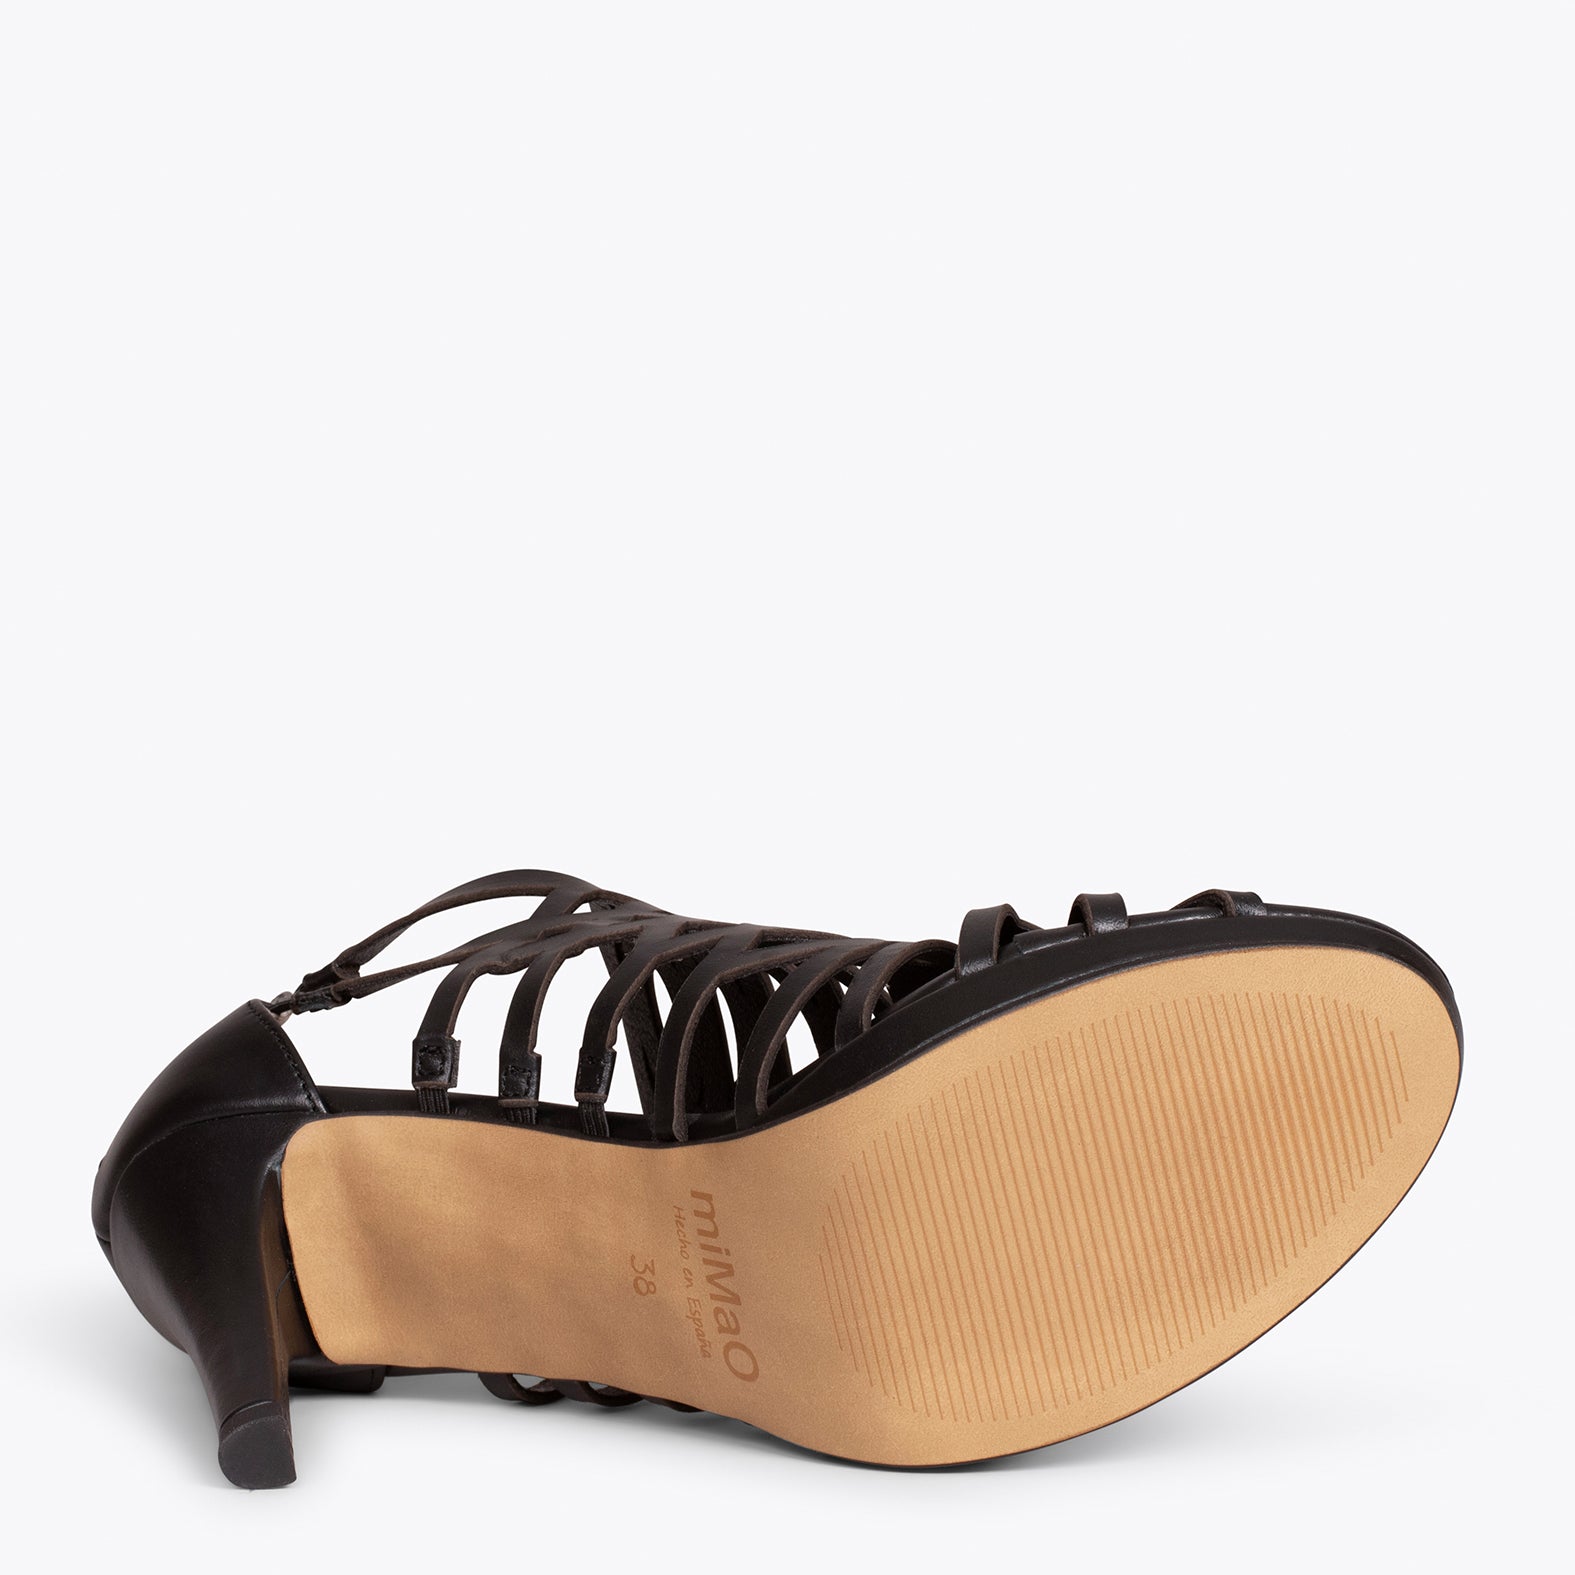 GALA – BLACK high heel party sandals